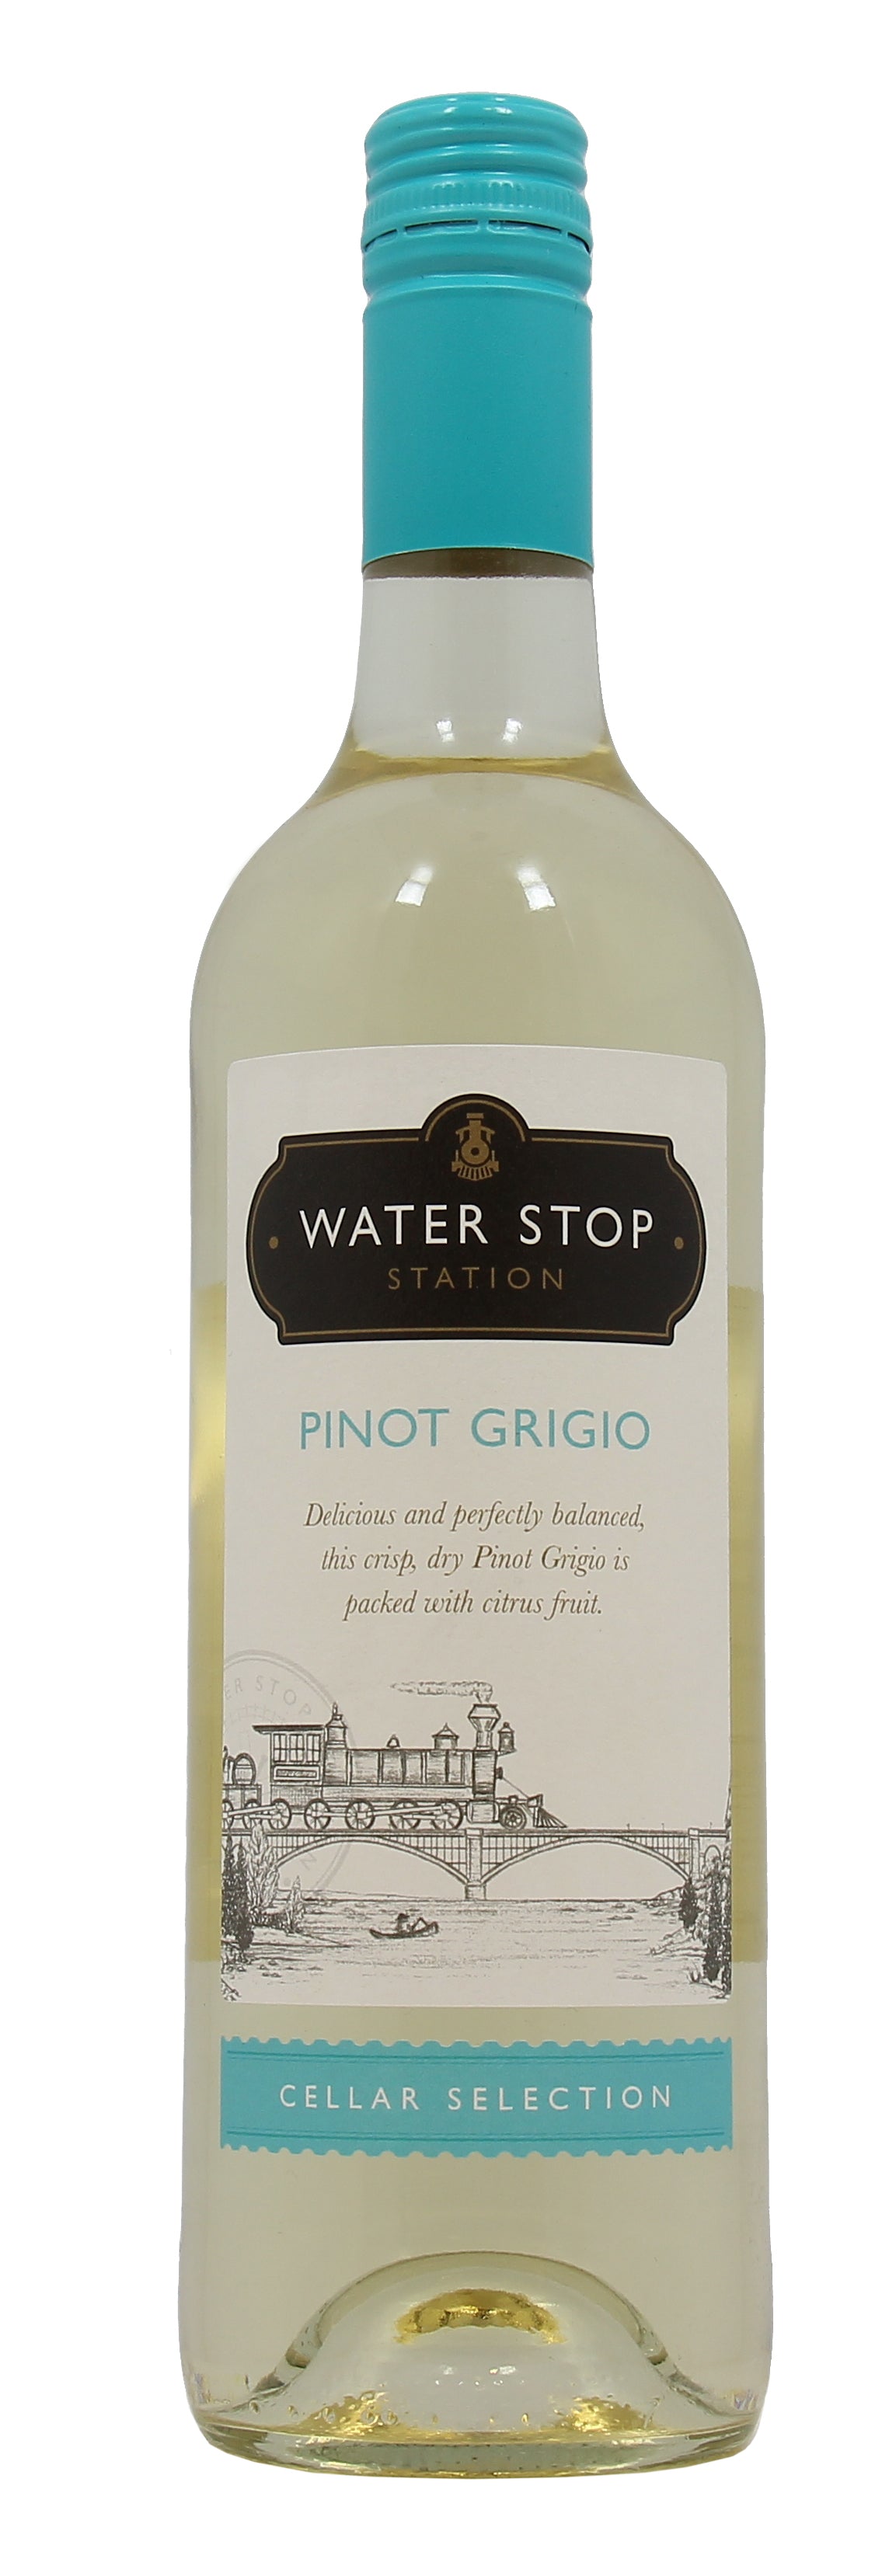 Water Stop Station Pinot Grigio